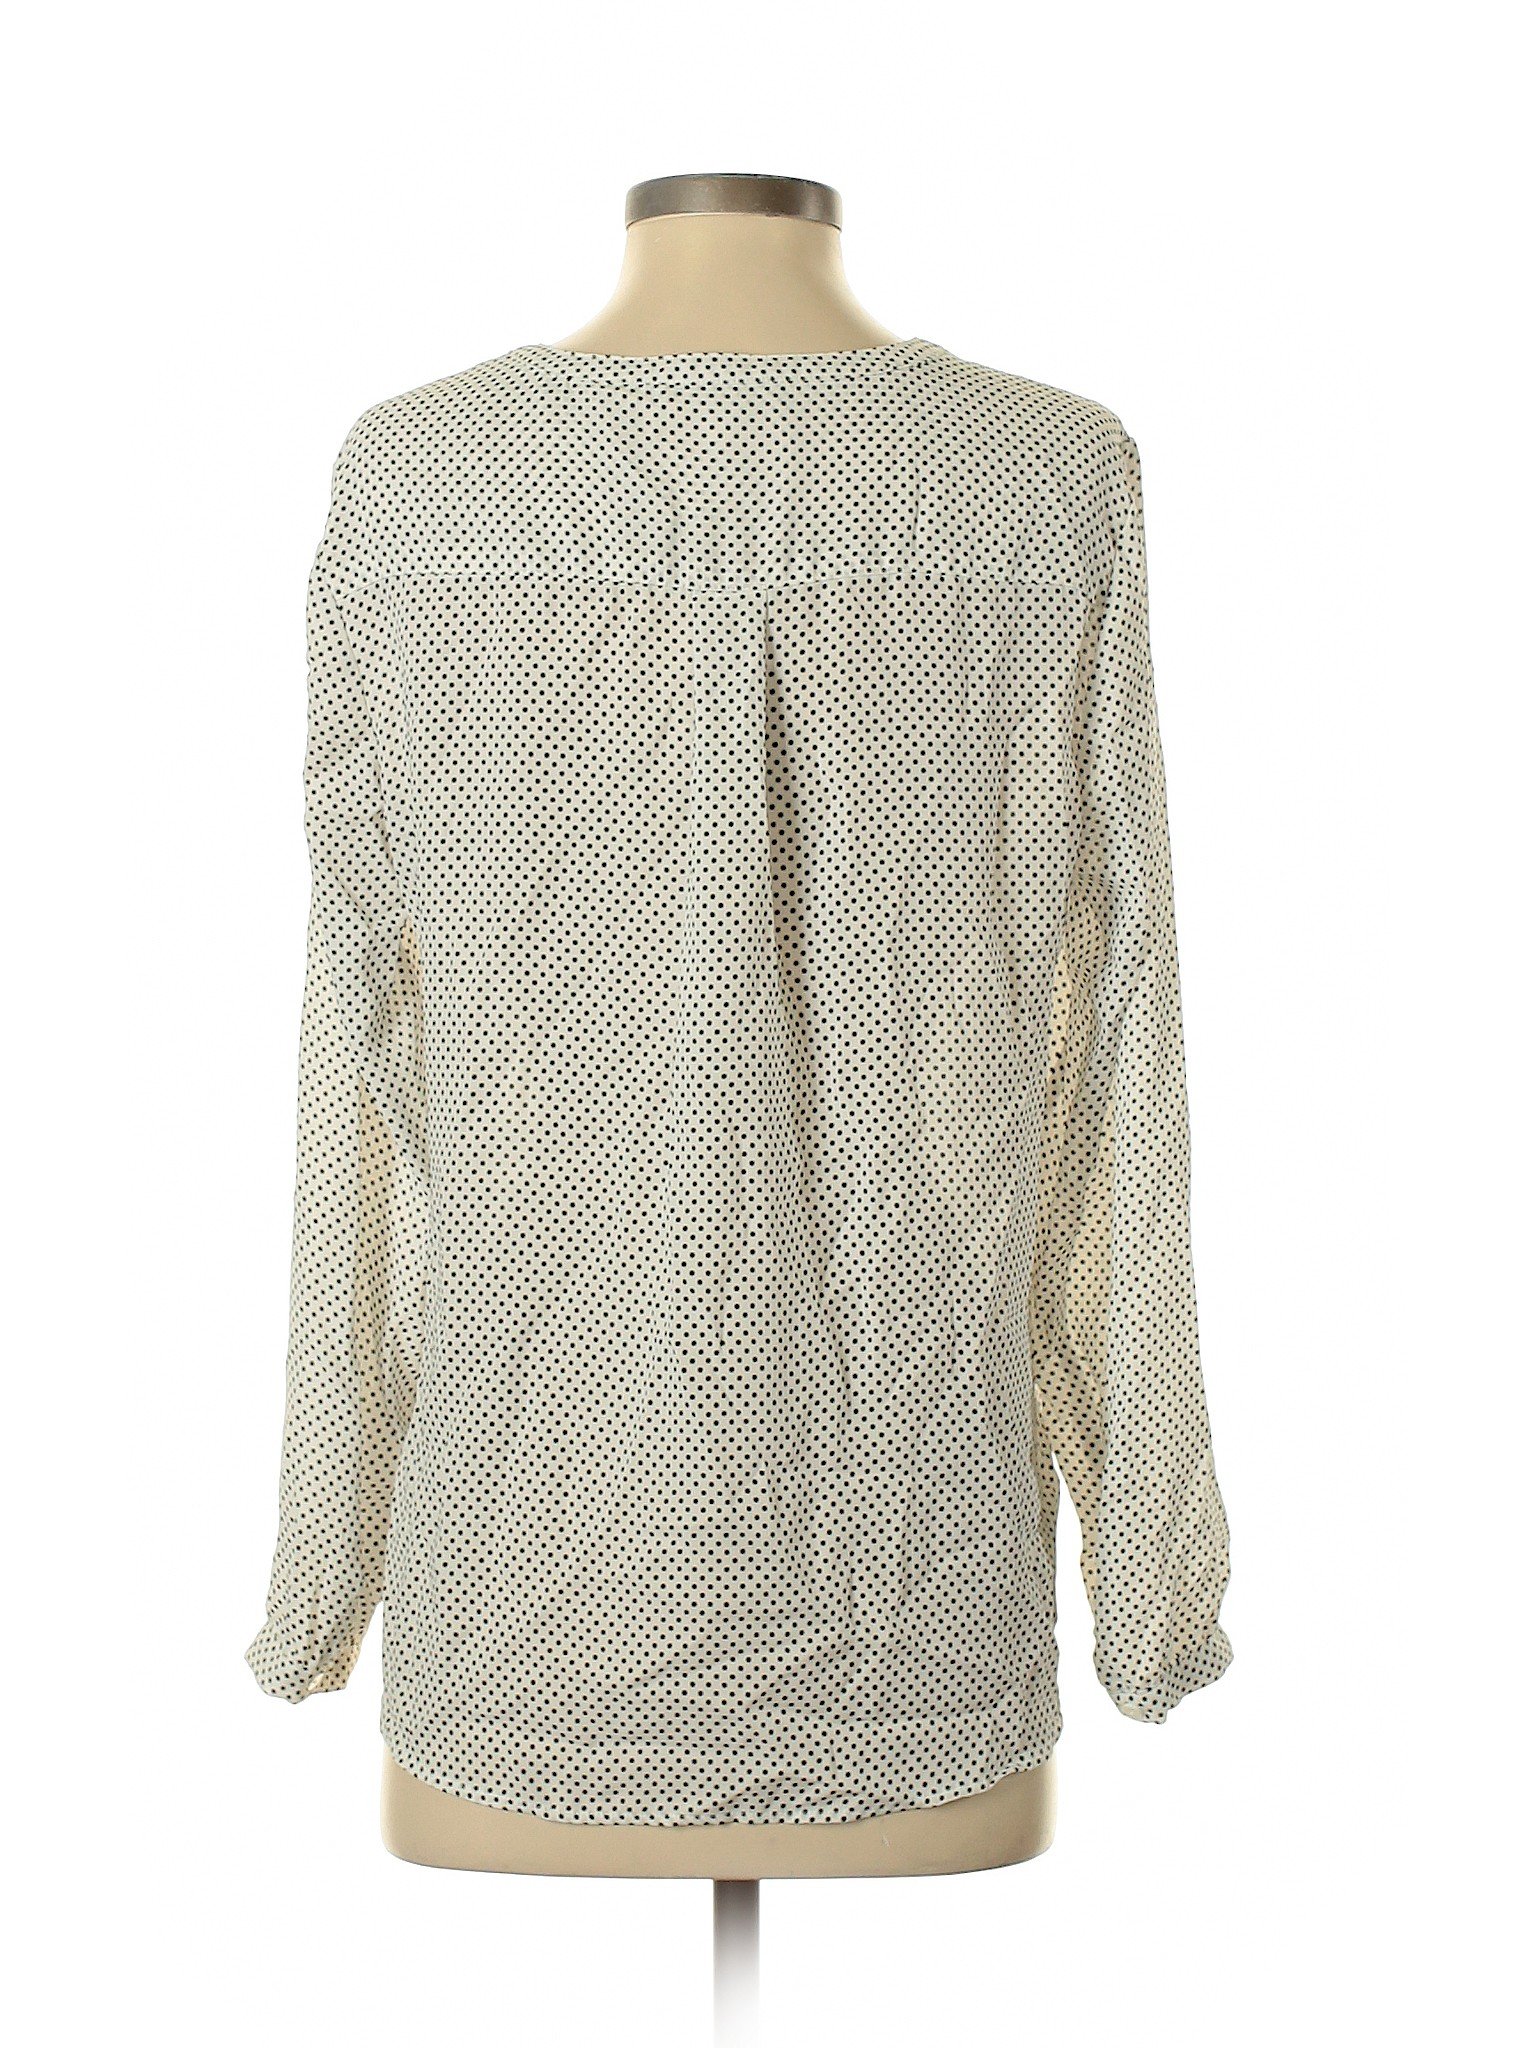 Adrianna Papell Women Ivory Long Sleeve Top S | eBay